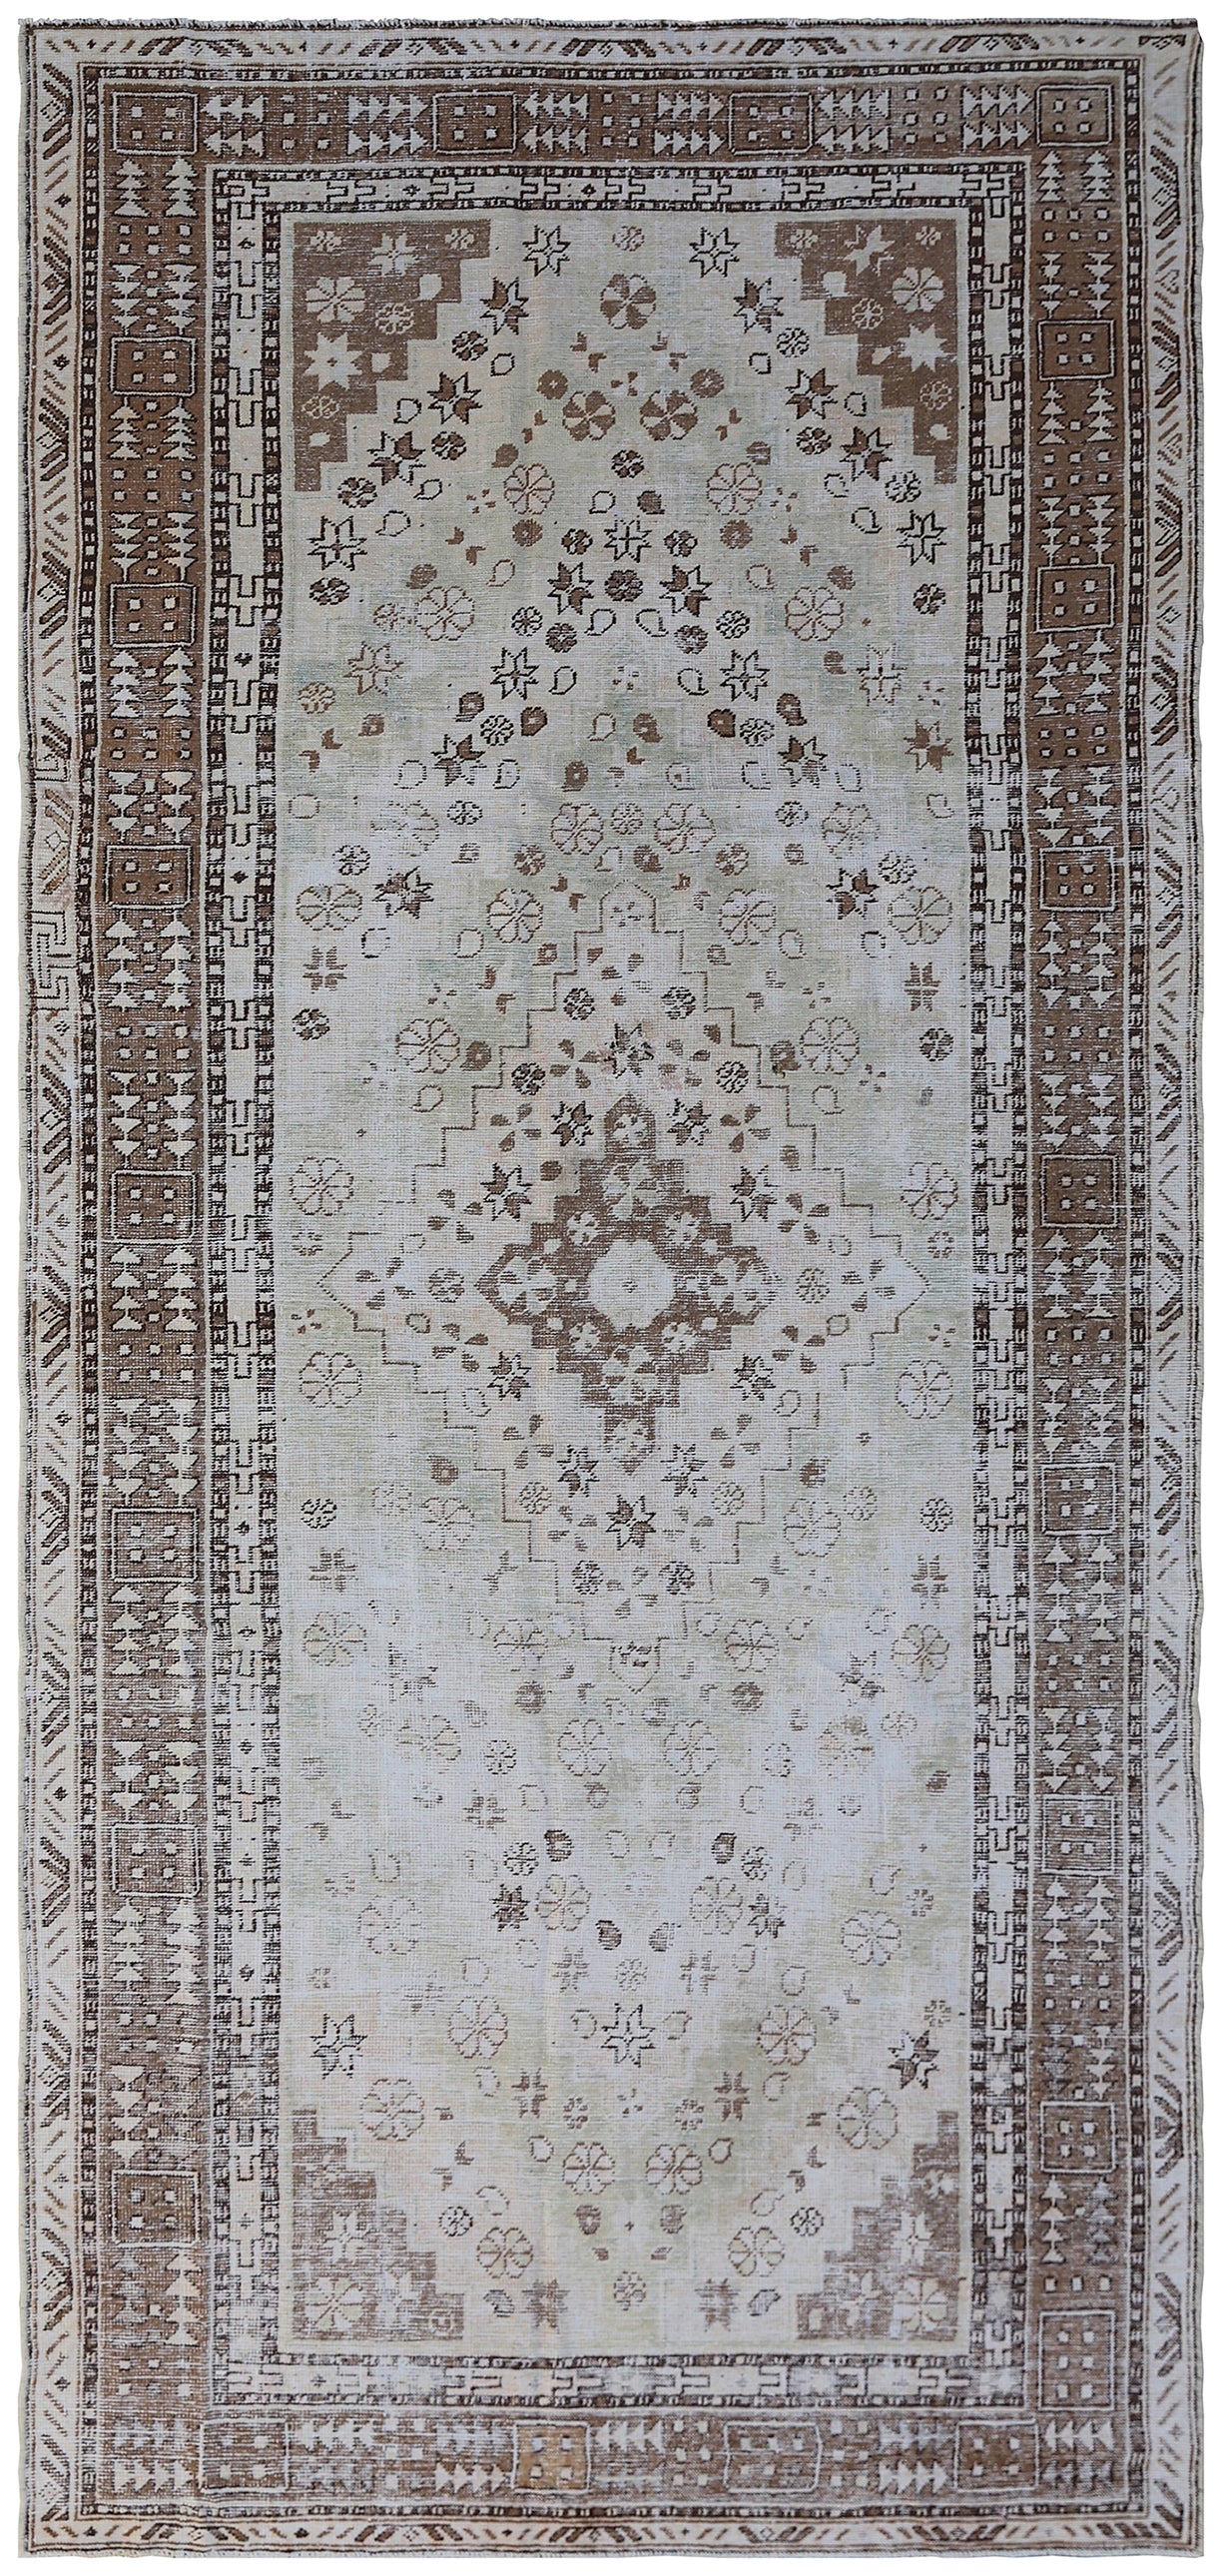 5'x10' Ariana Antique Samarkand Traditional Rug